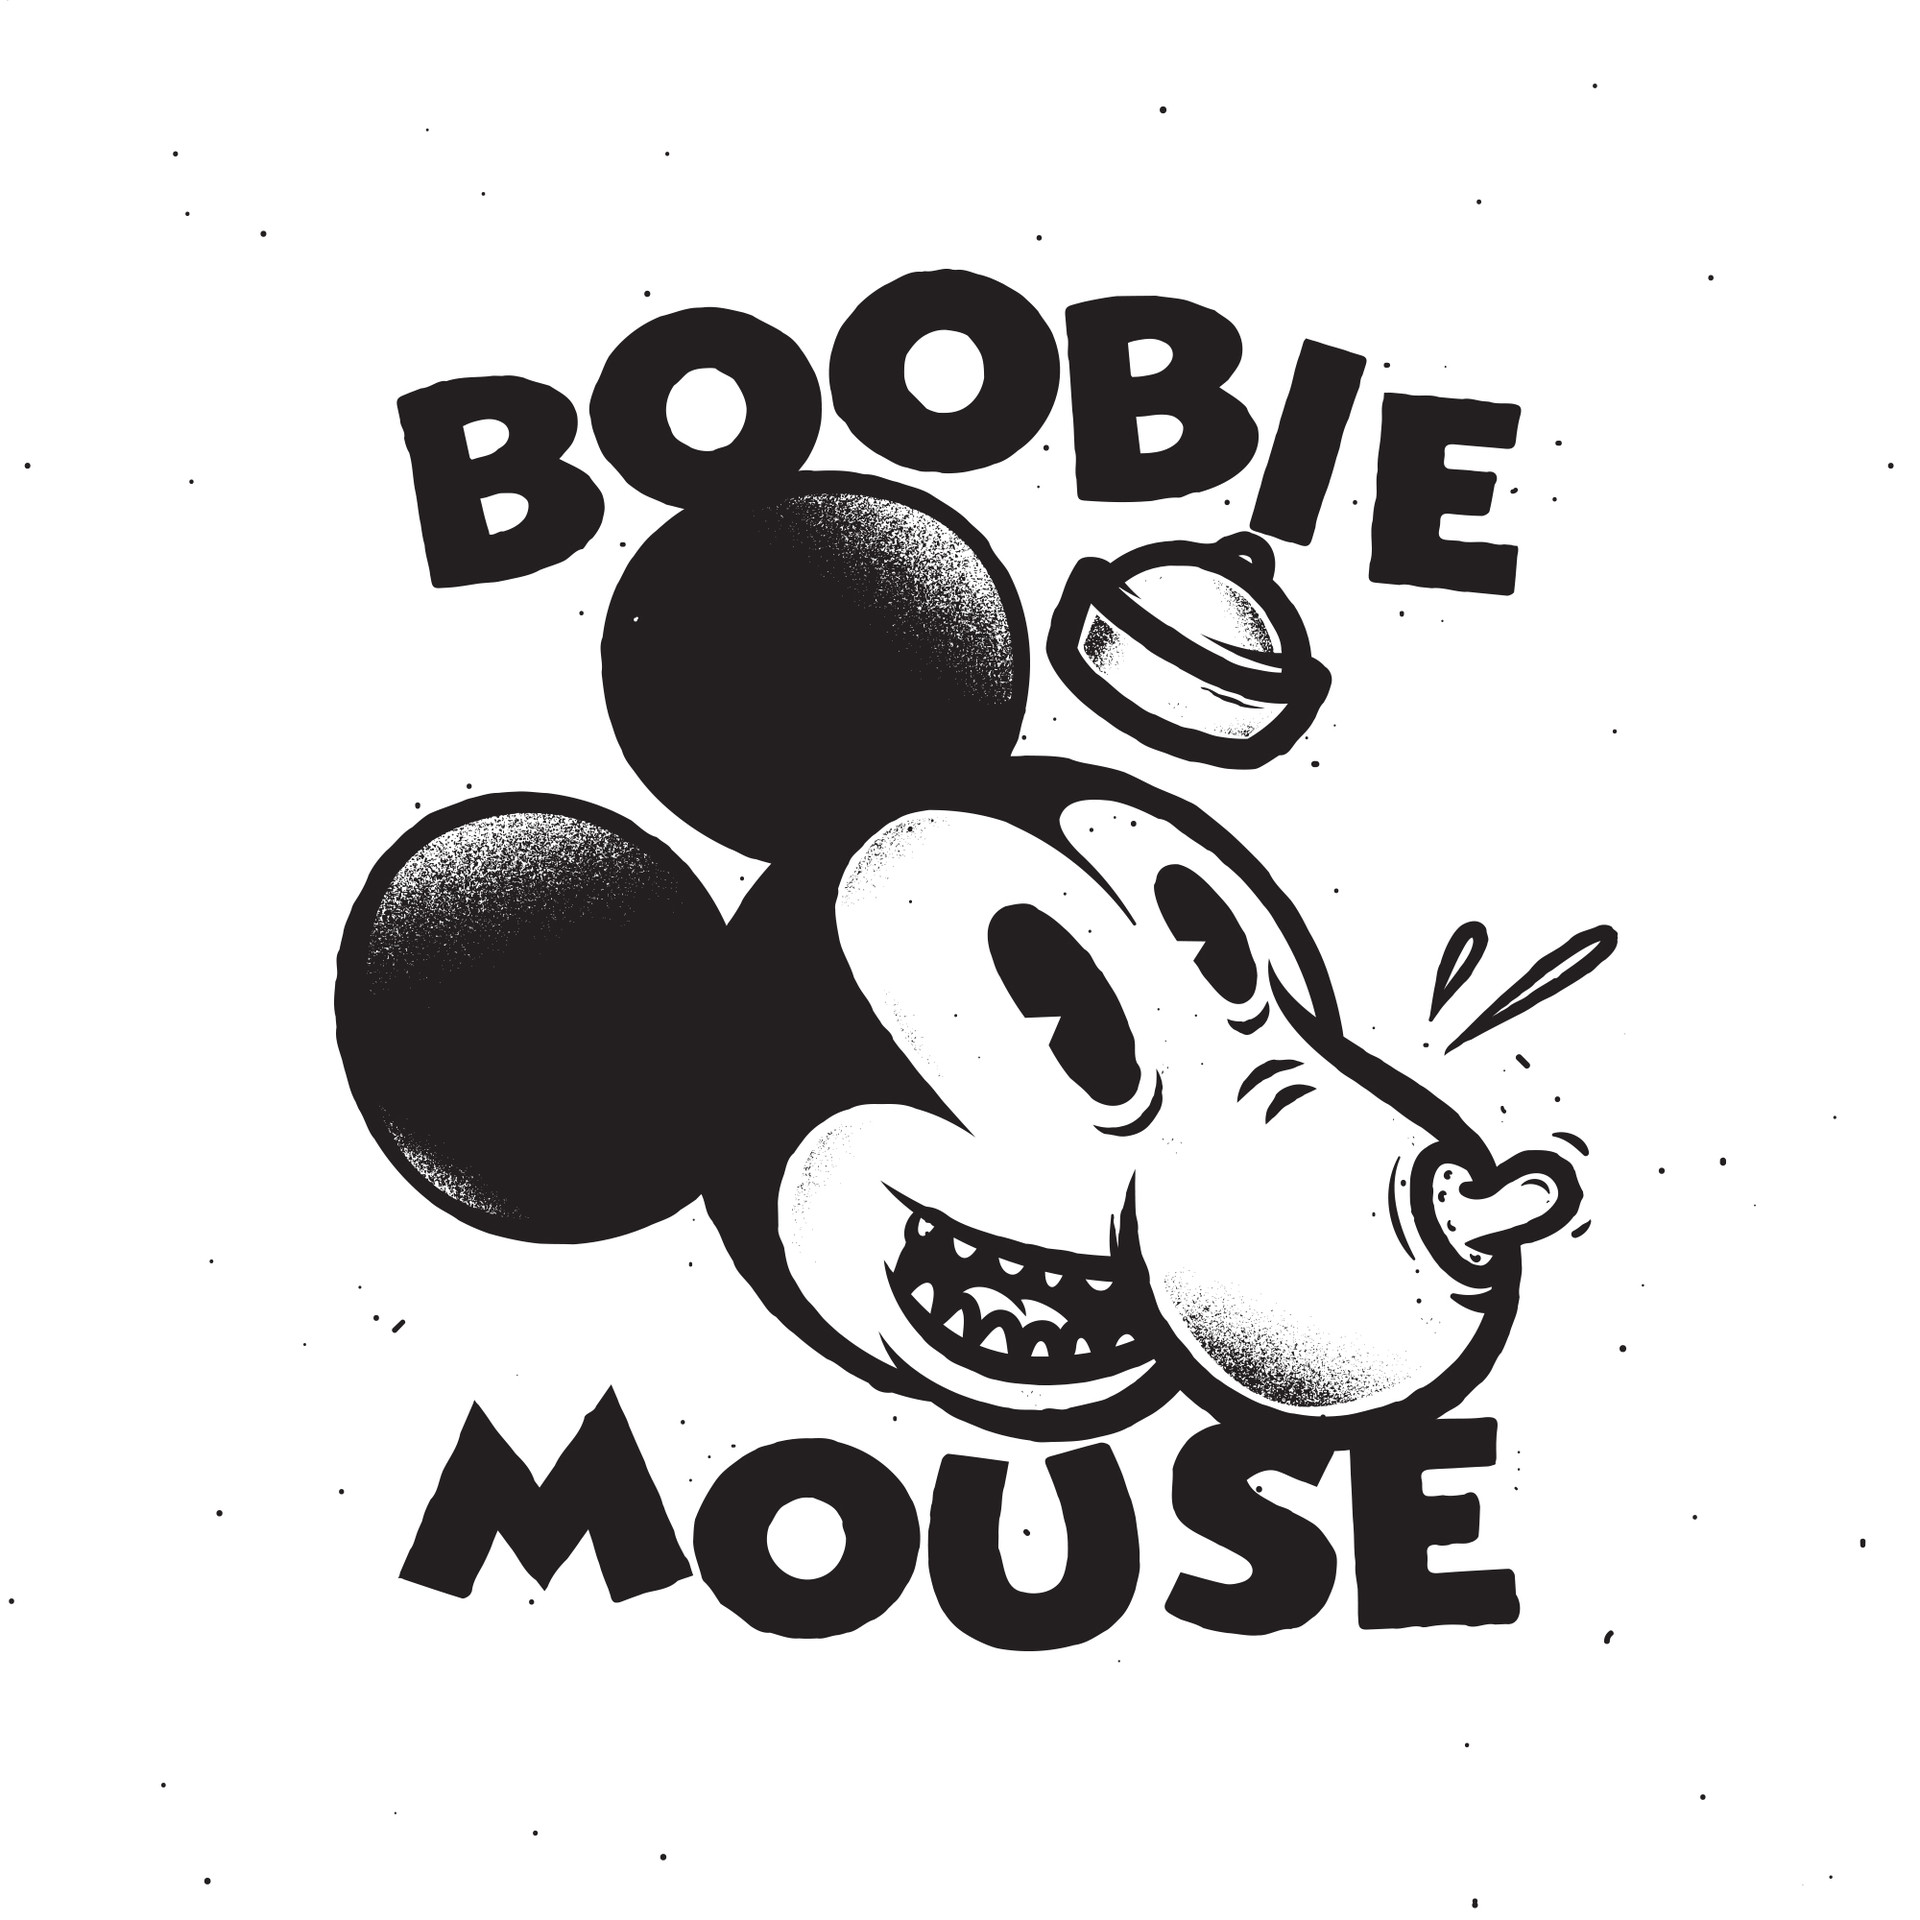 Boobie Mouse.